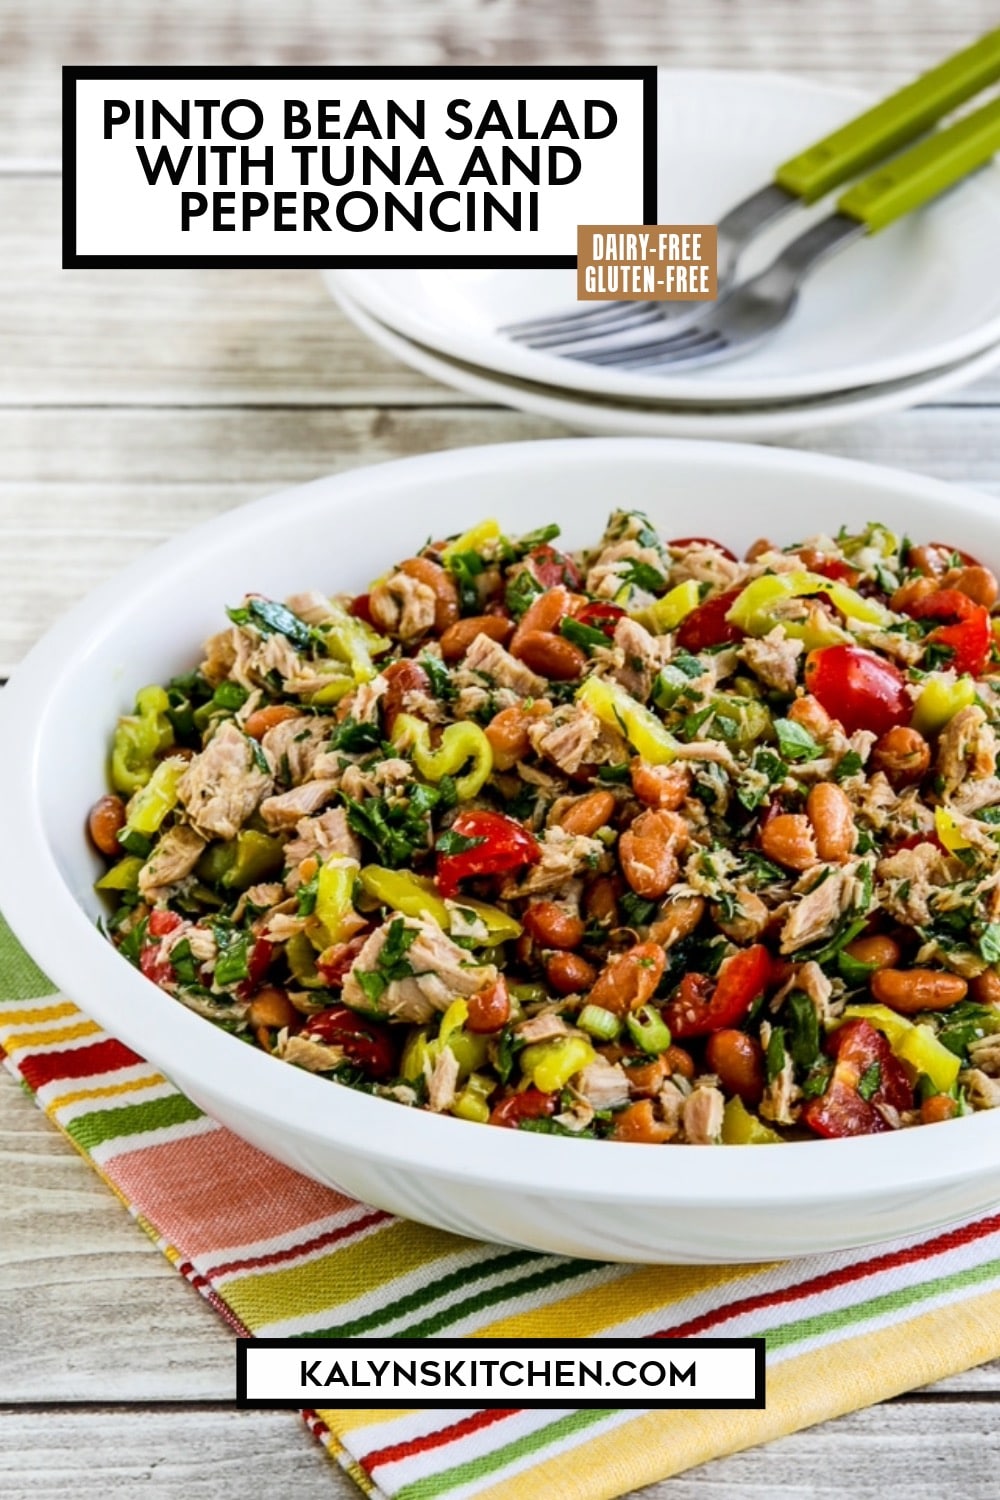 Pinterest image of Pinto Bean Salad with Tuna and Peperoncini